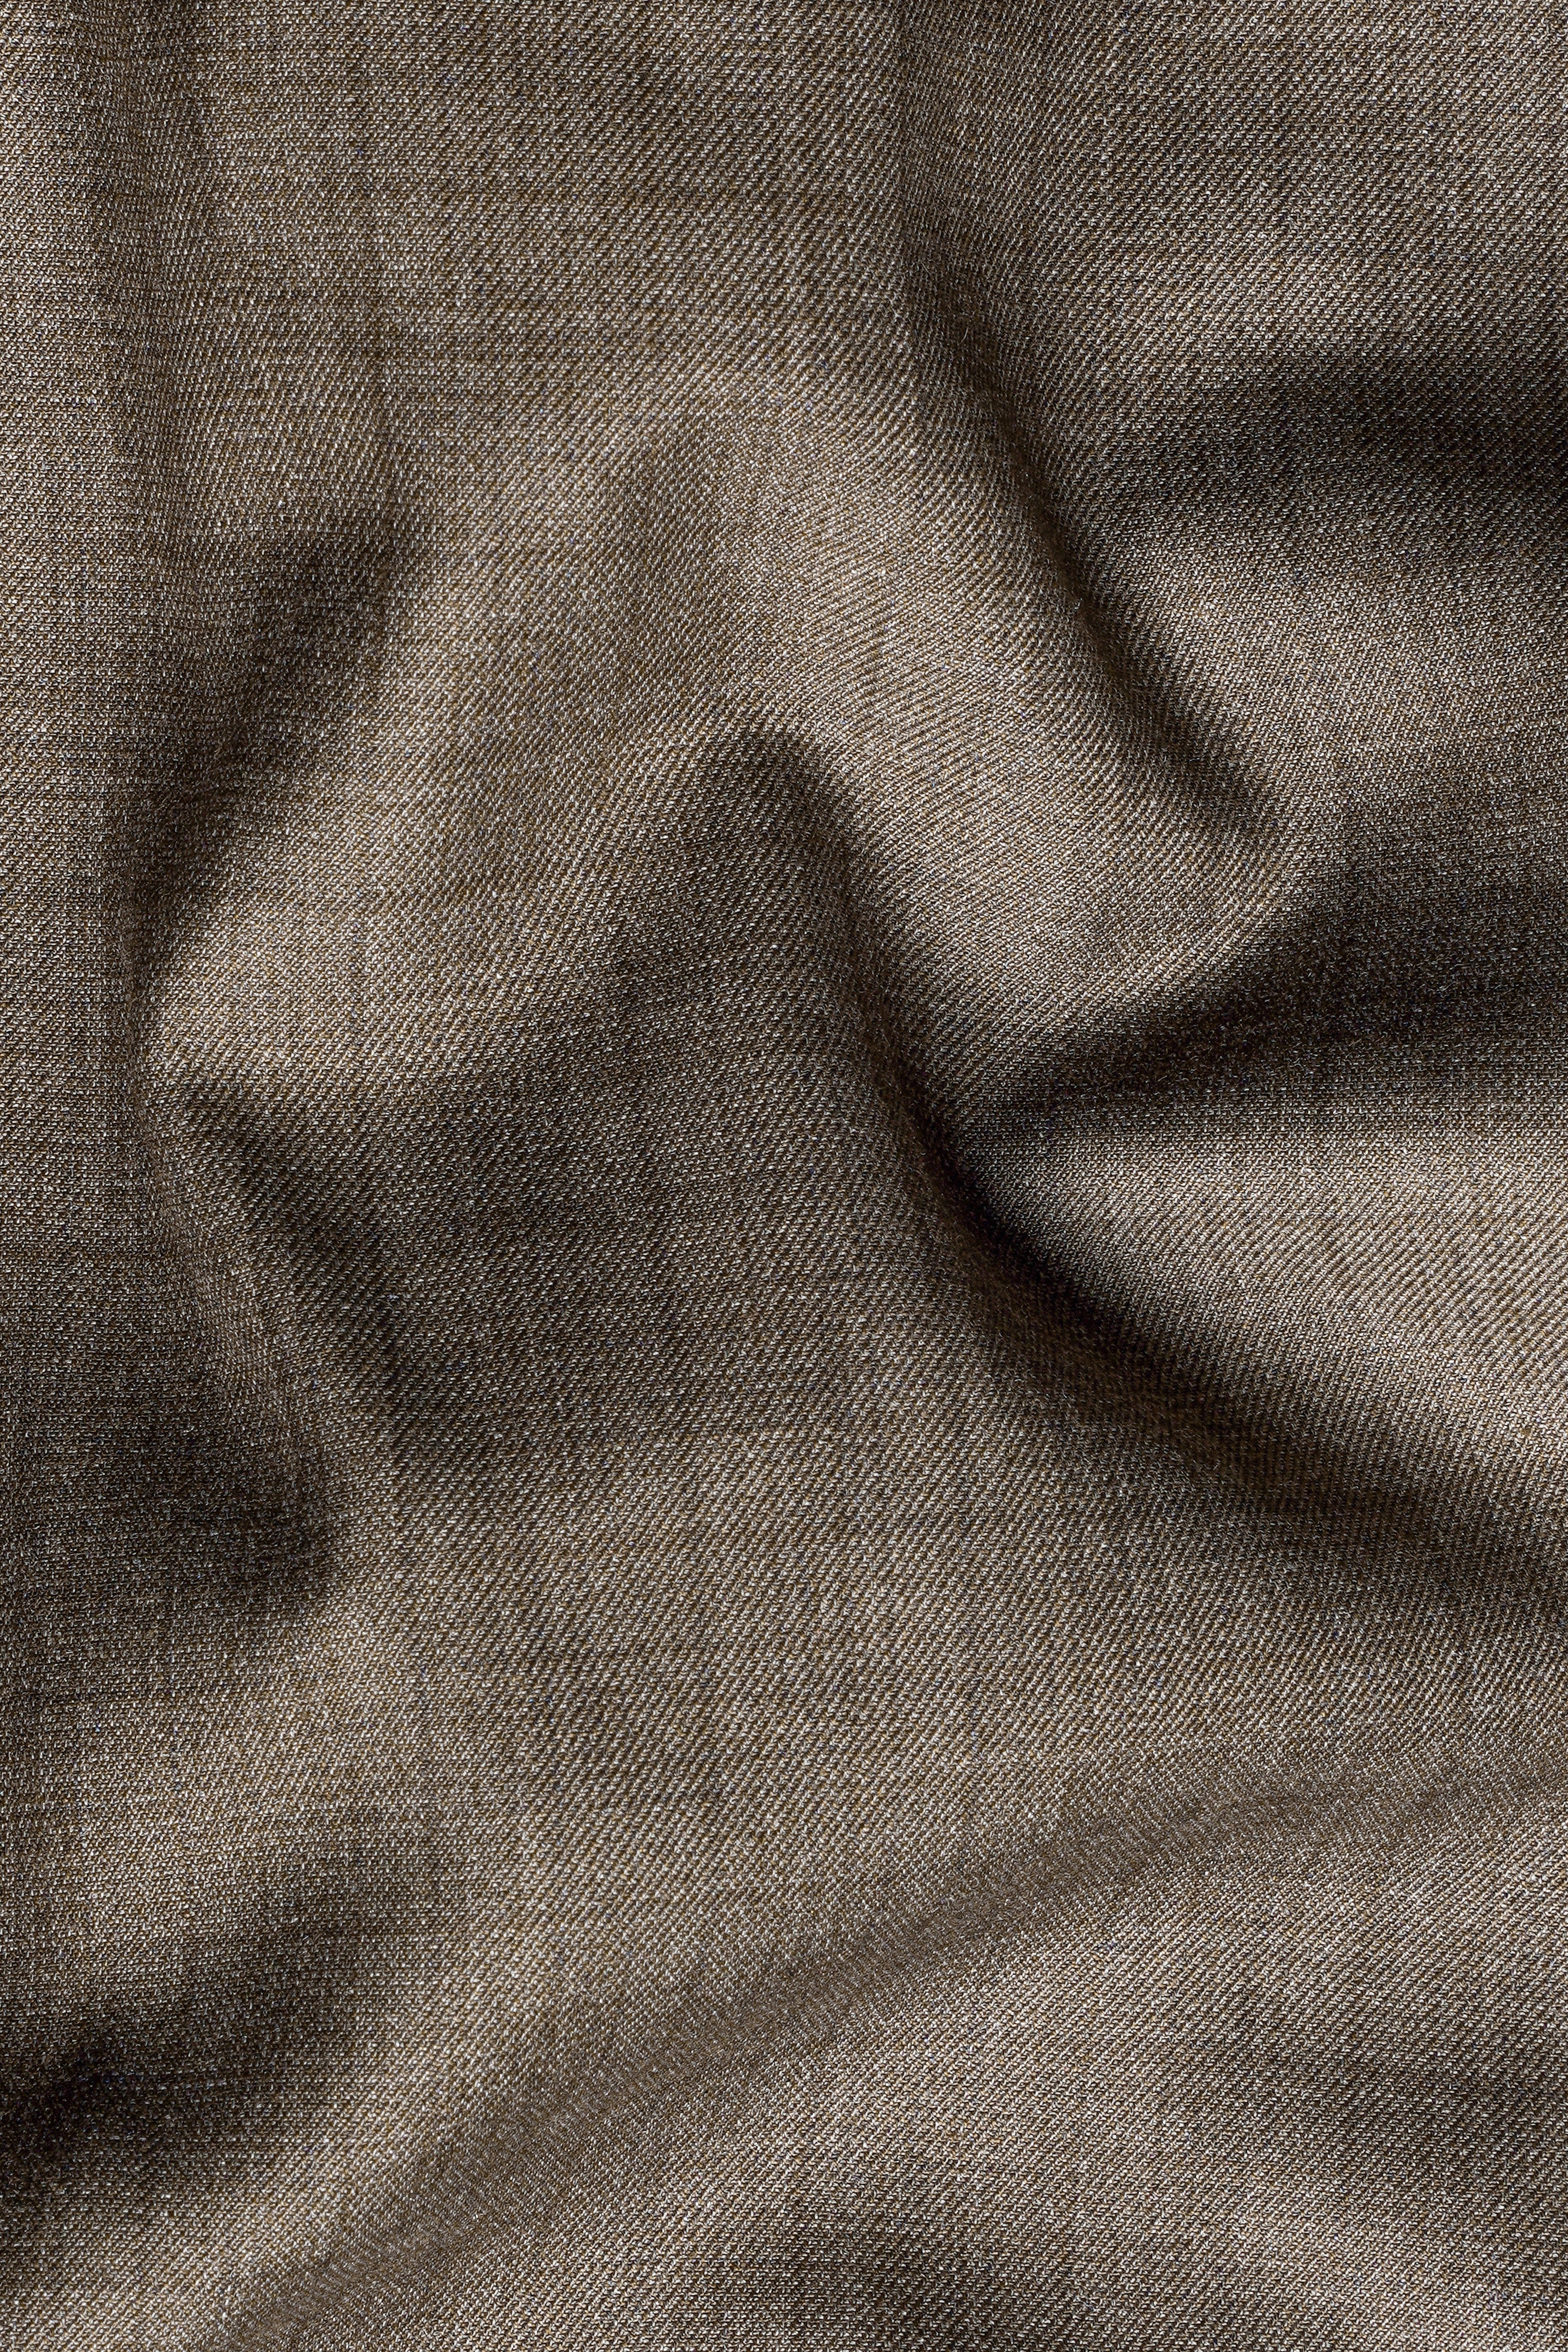 Hemp Brown Checkered Wool Rich Waistcoat V2935-36, V2935-38, V2935-40, V2935-42, V2935-44, V2935-46, V2935-48, V2935-50, V2935-35, V2935-54, V2935-56, V2935-58, V2935-60